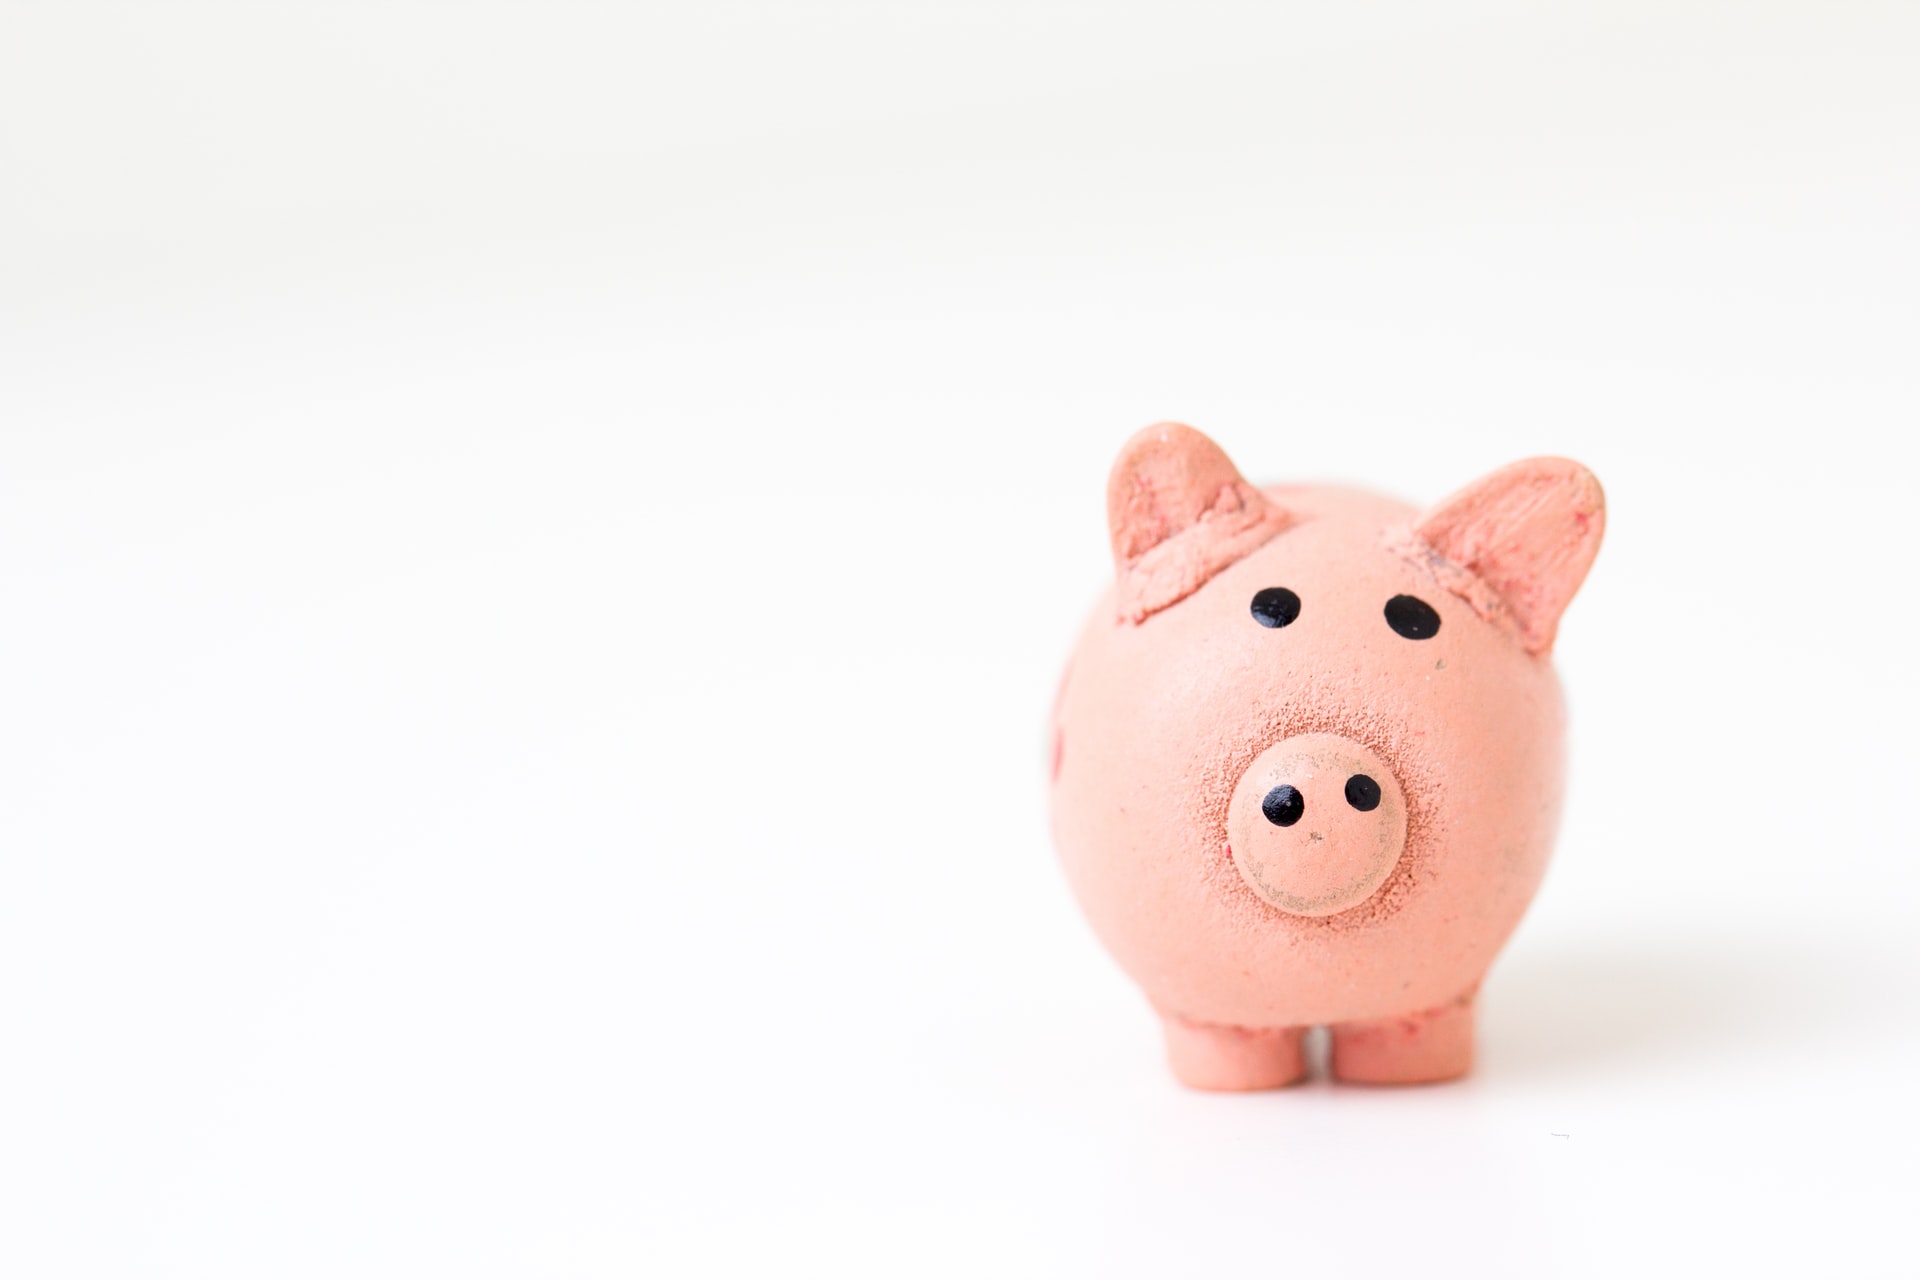 refinance your home loan piggy bank